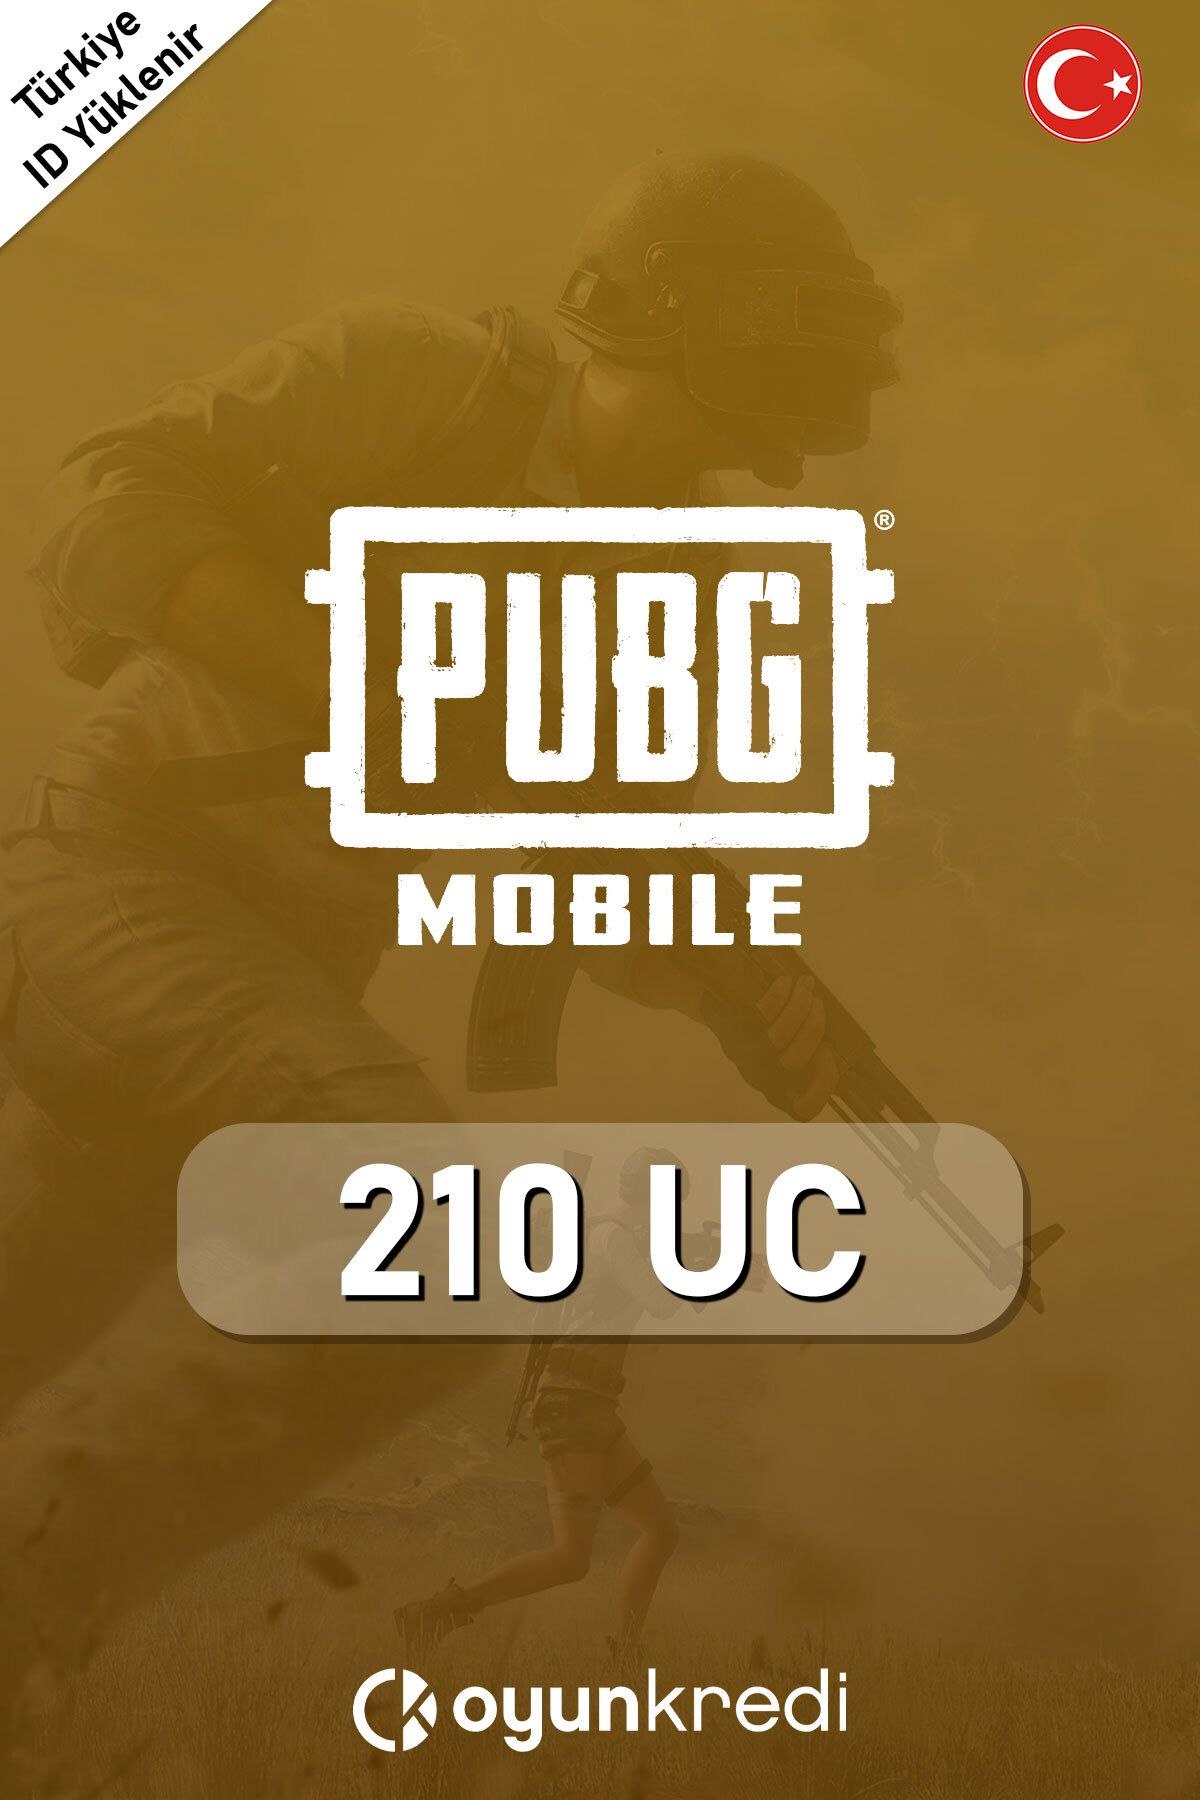 Pubg Mobile 210 Uc